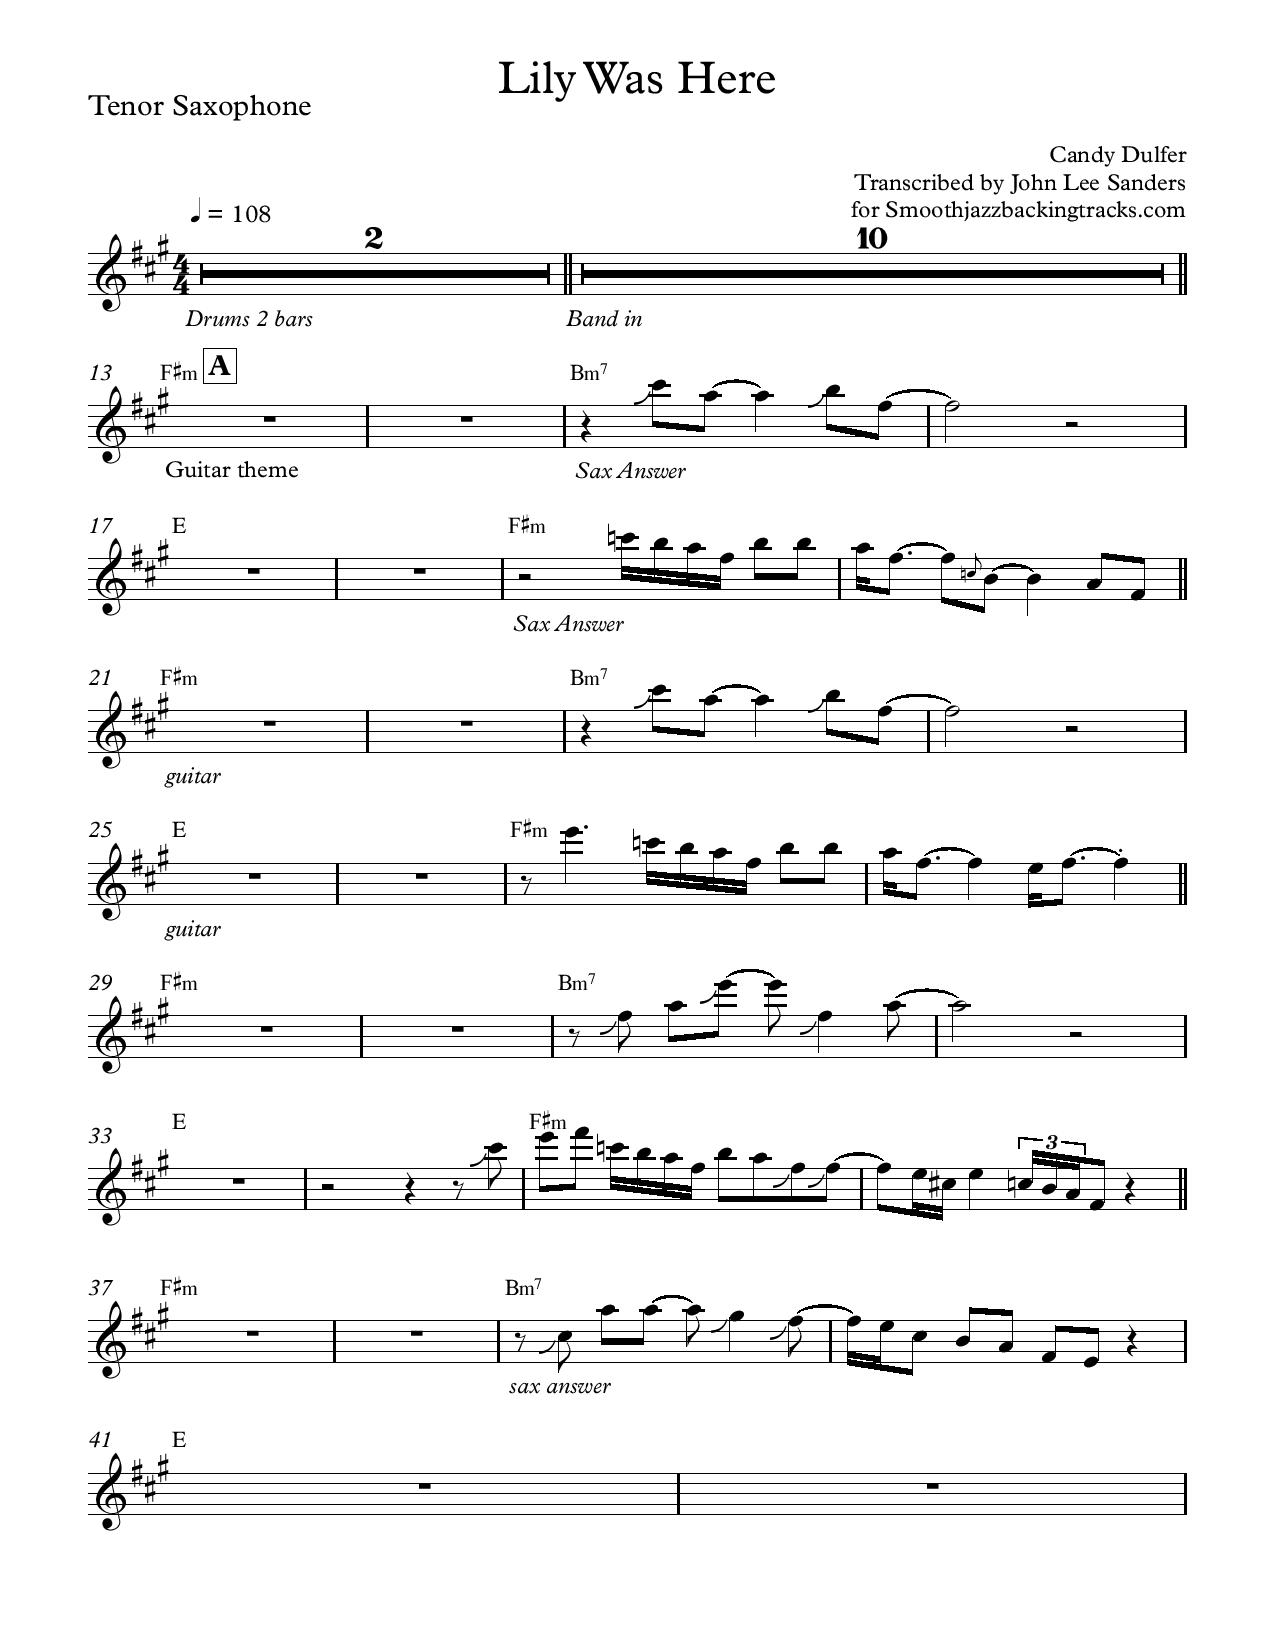 Careless whisper sax sheet music pdf chords.